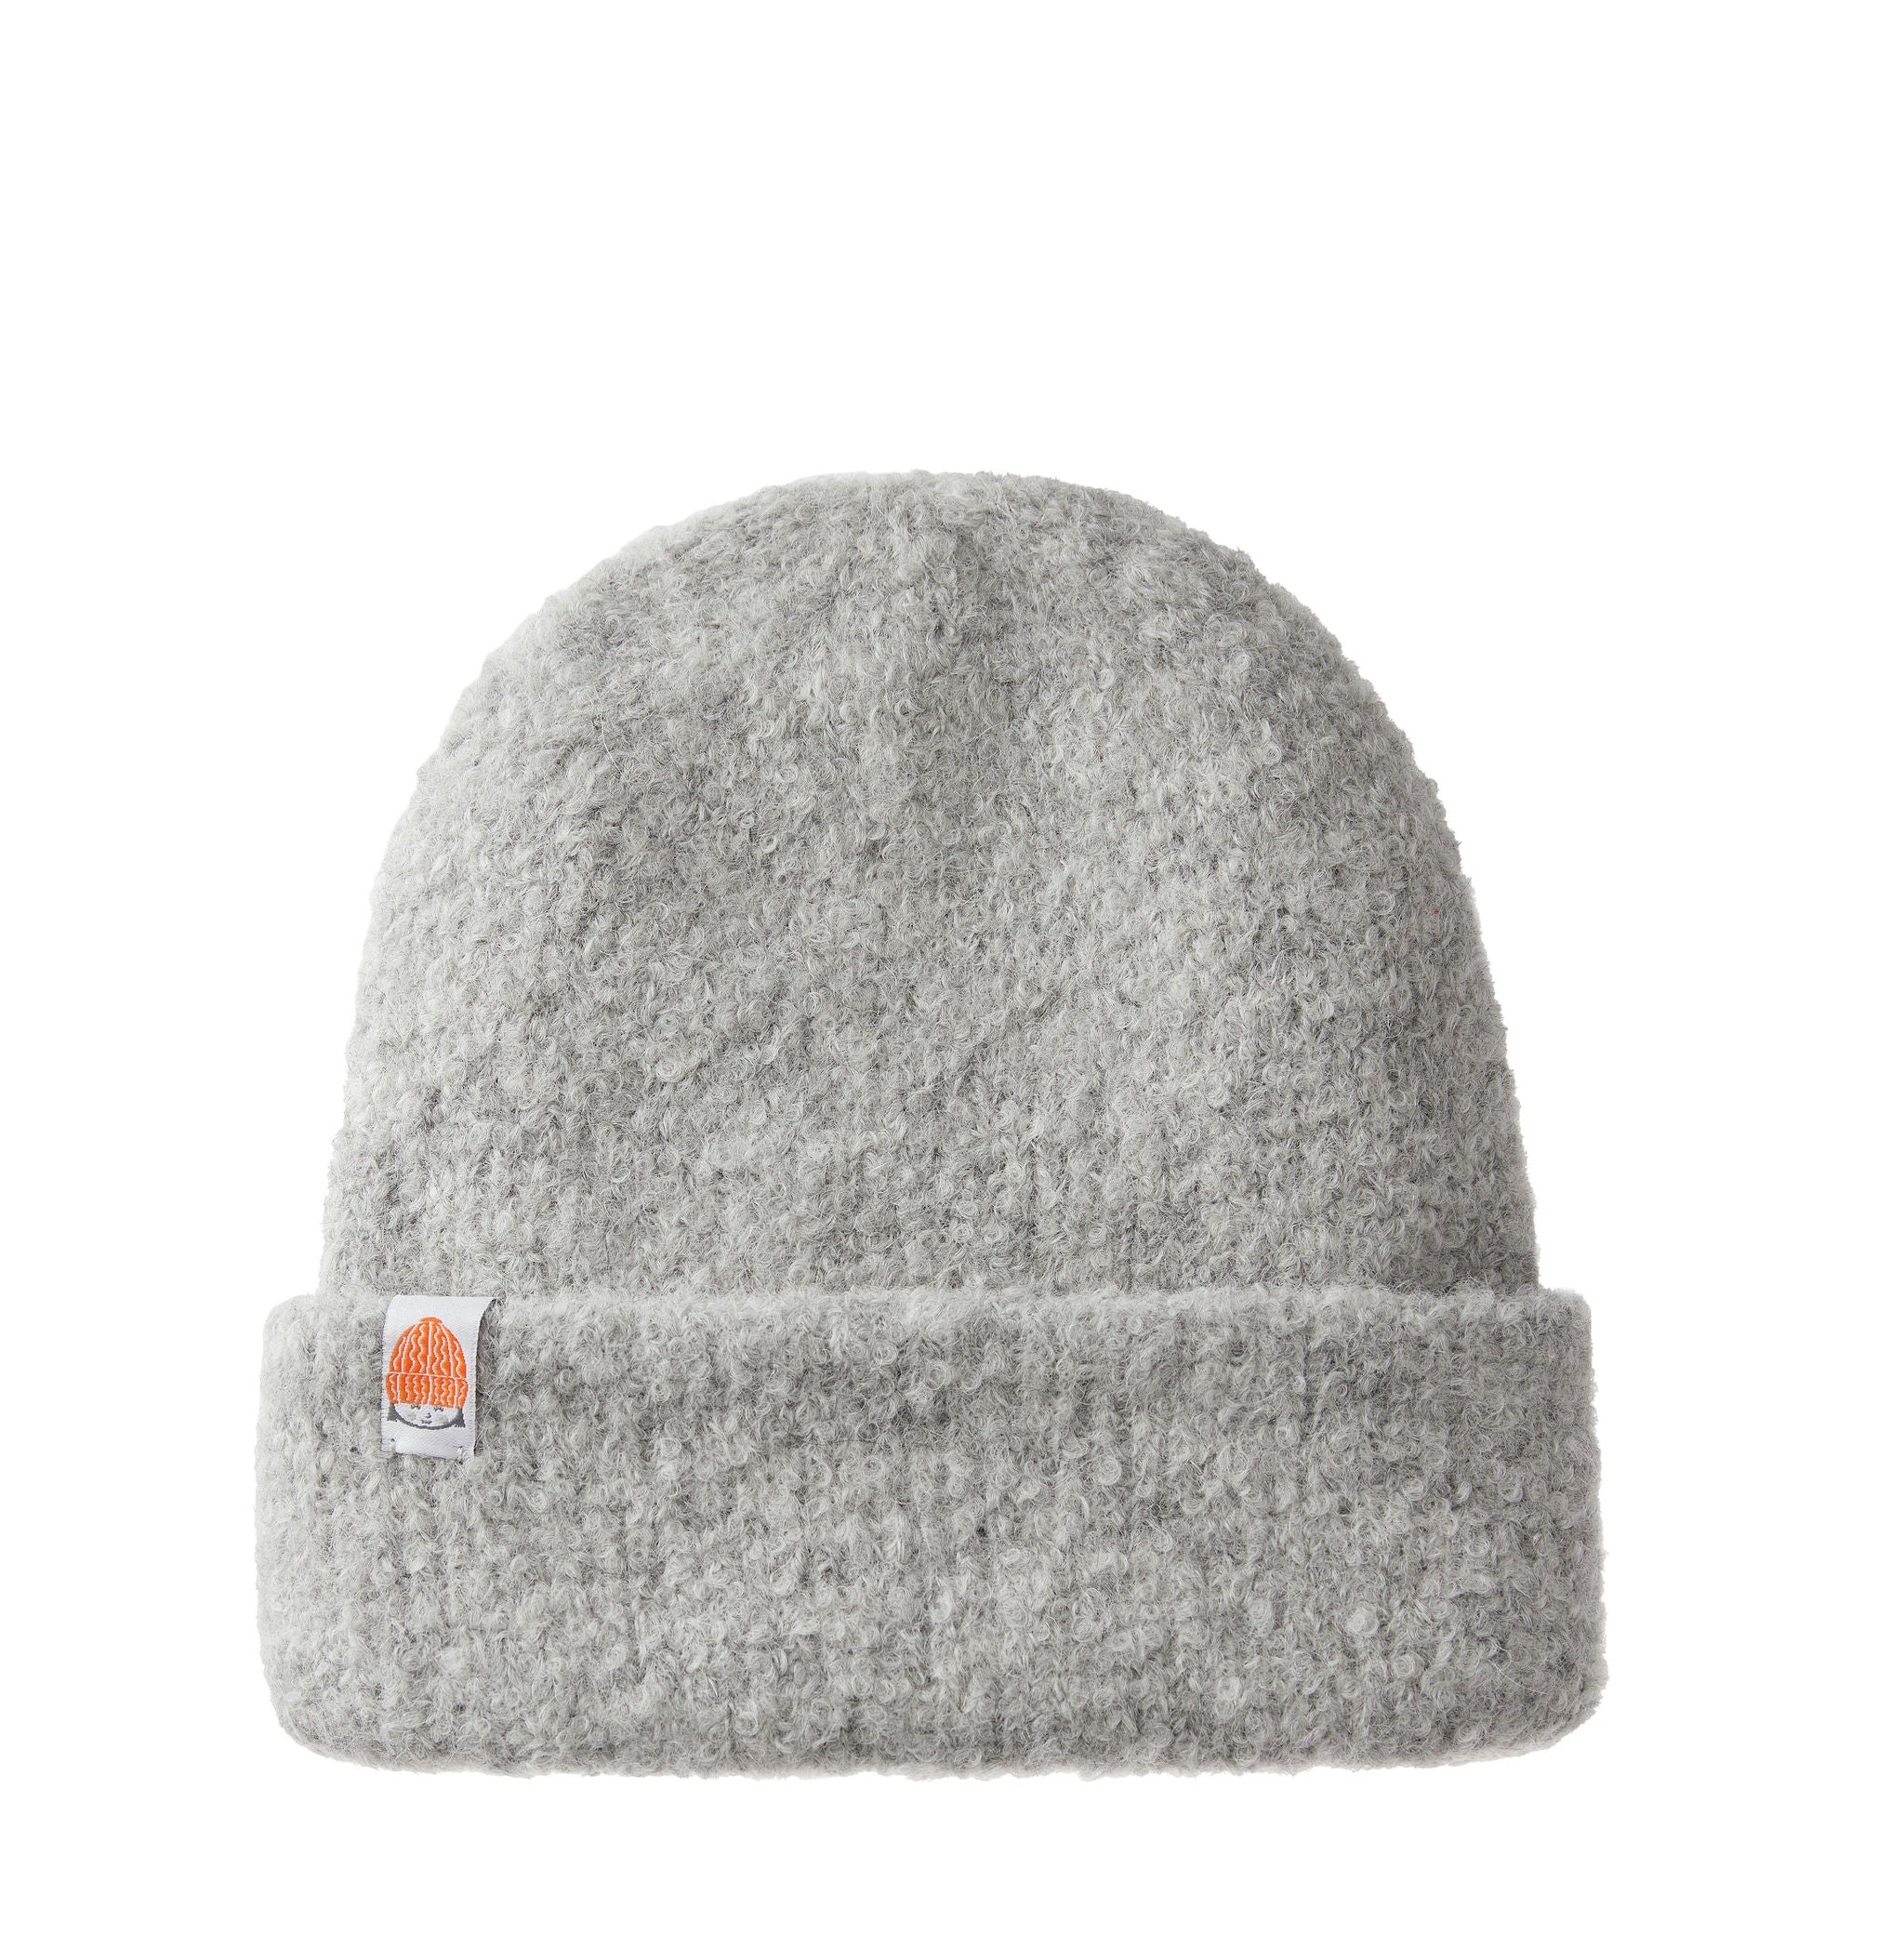 The Teddy Beanie | Alpaca Wool Winter Hats | Sh*t That I Knit